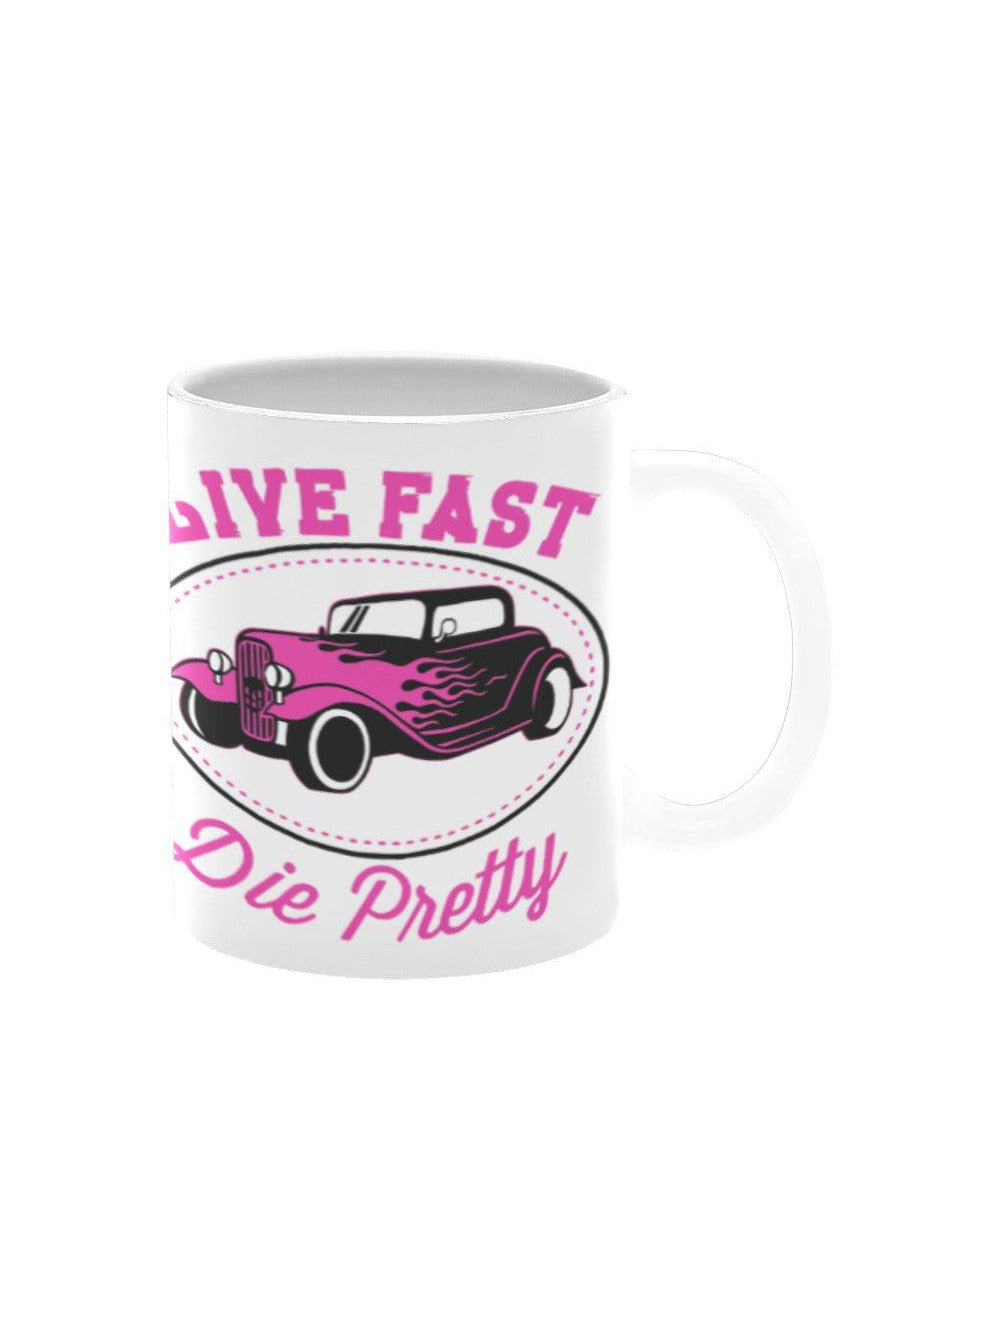 Live Fast Die Pretty Mug